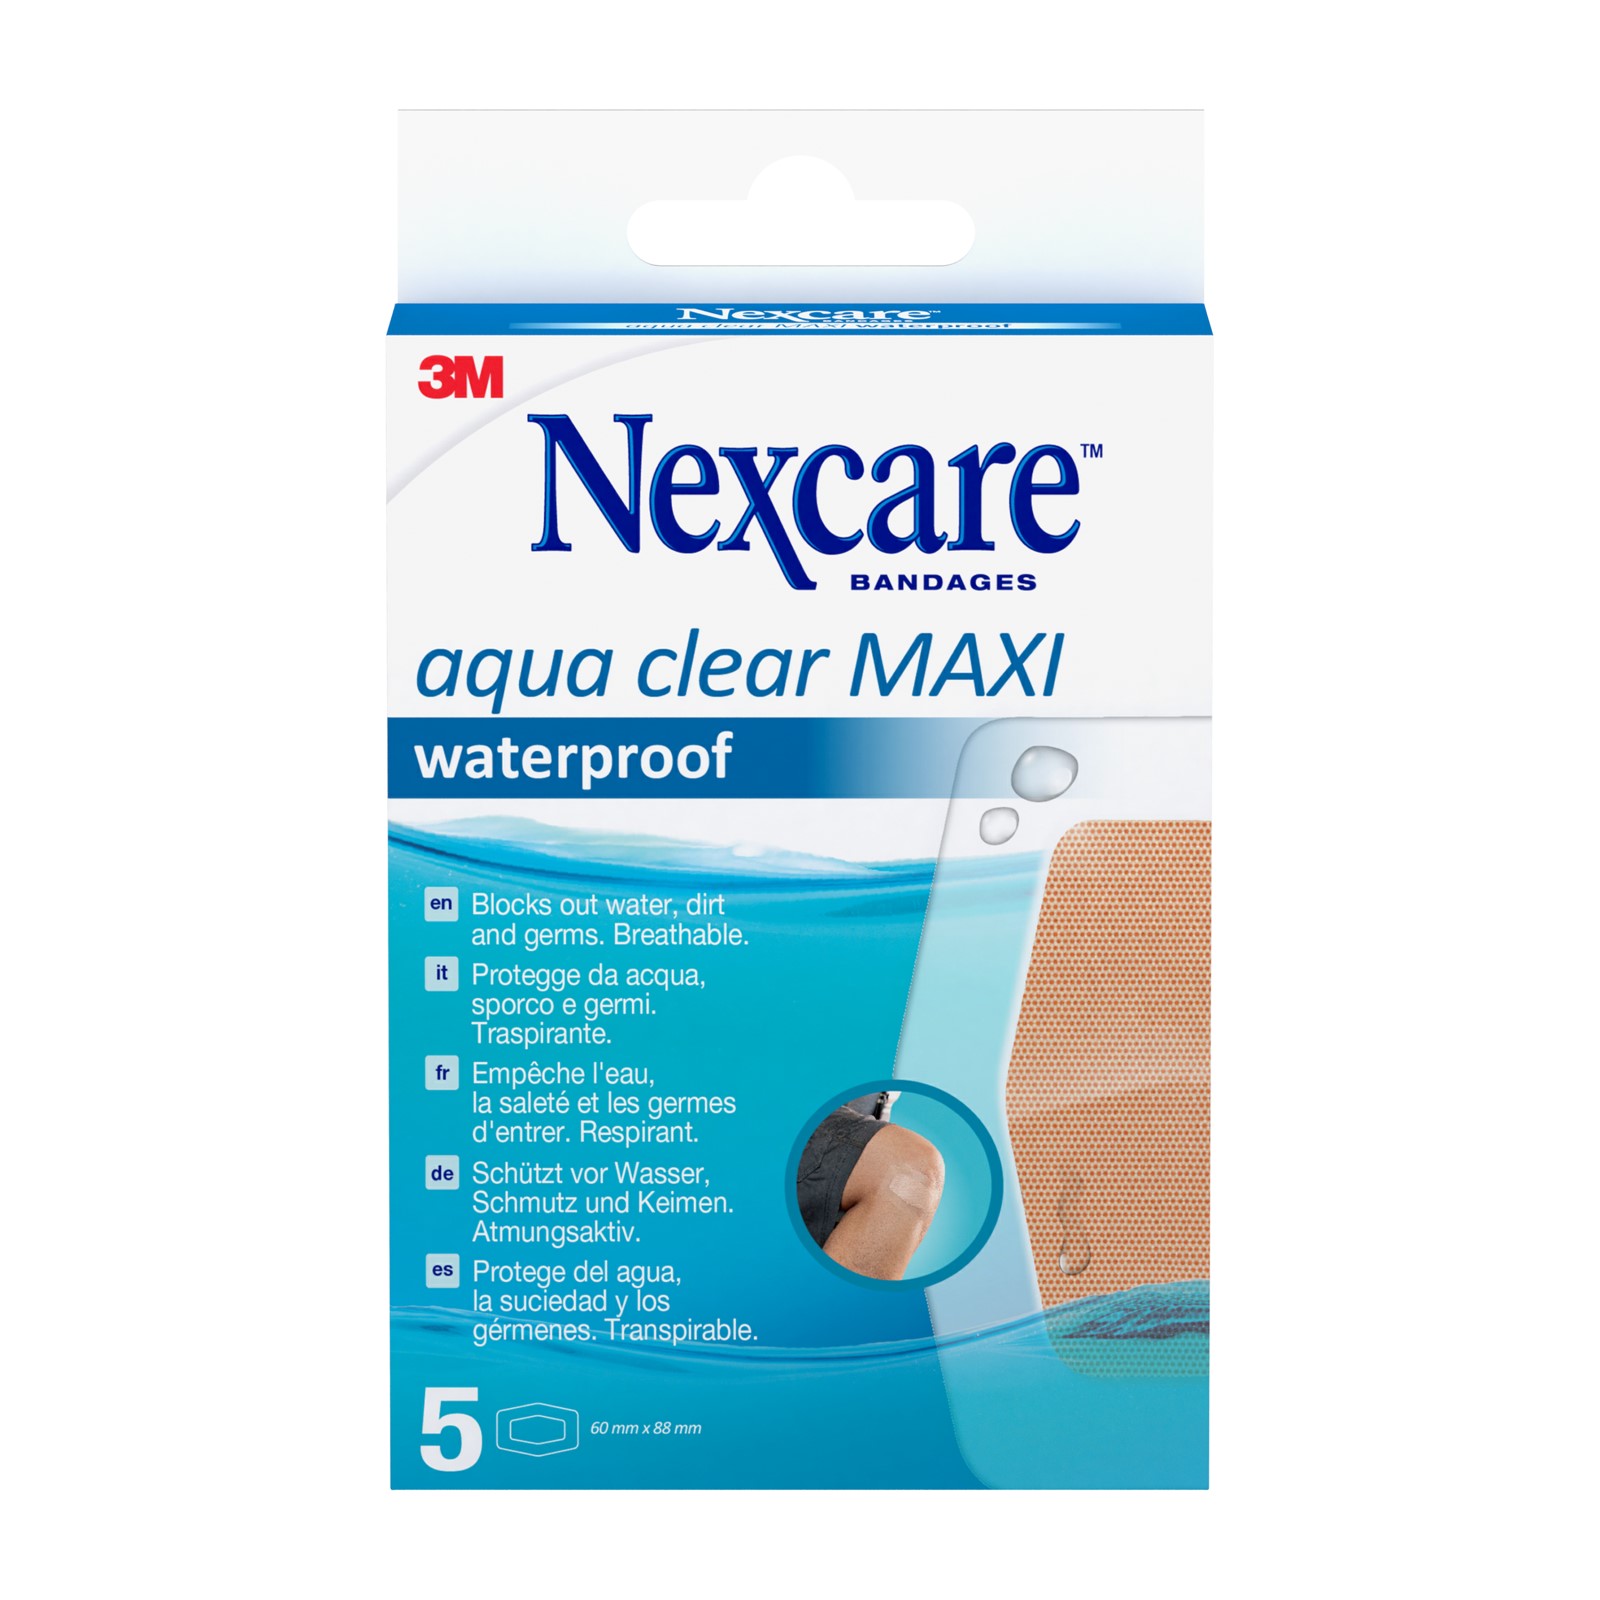 Nexcare™ Aqua Clear MAXI Waterproof Pflaster, 60 mm x 88 mm, 5/Pack